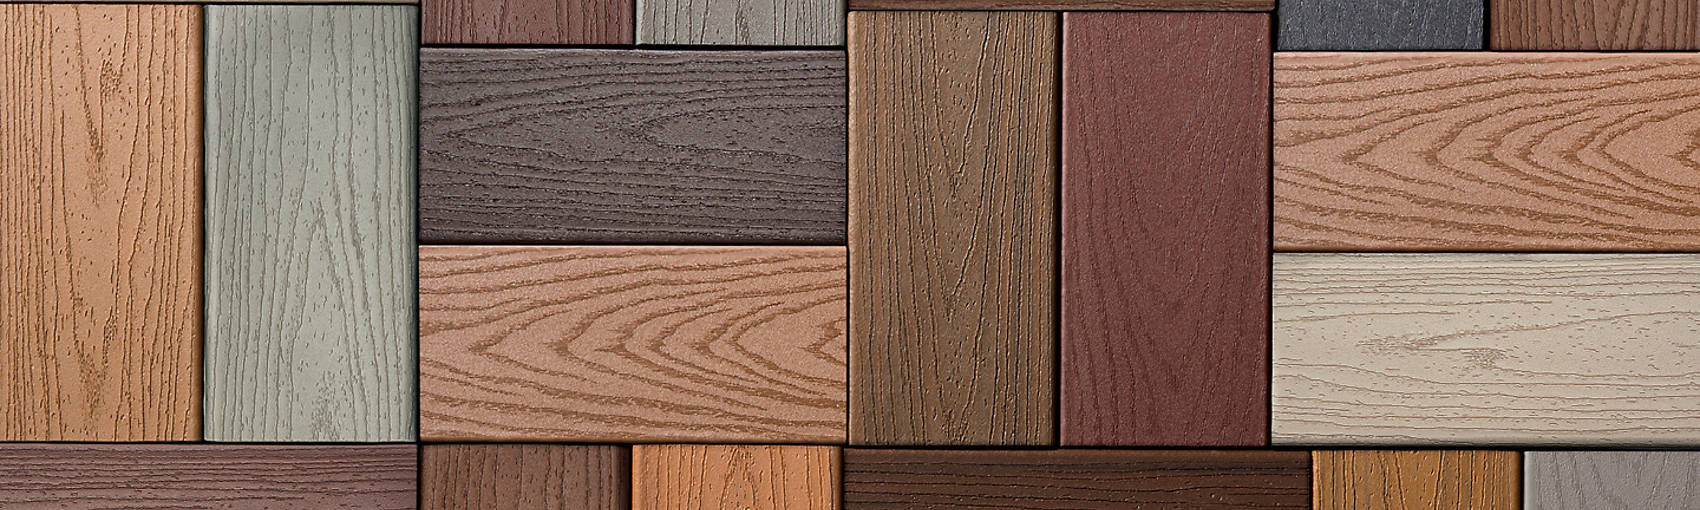 screening hardwood floors cost of composite decking composite deck materials trex pertaining to trex color selector hero 2